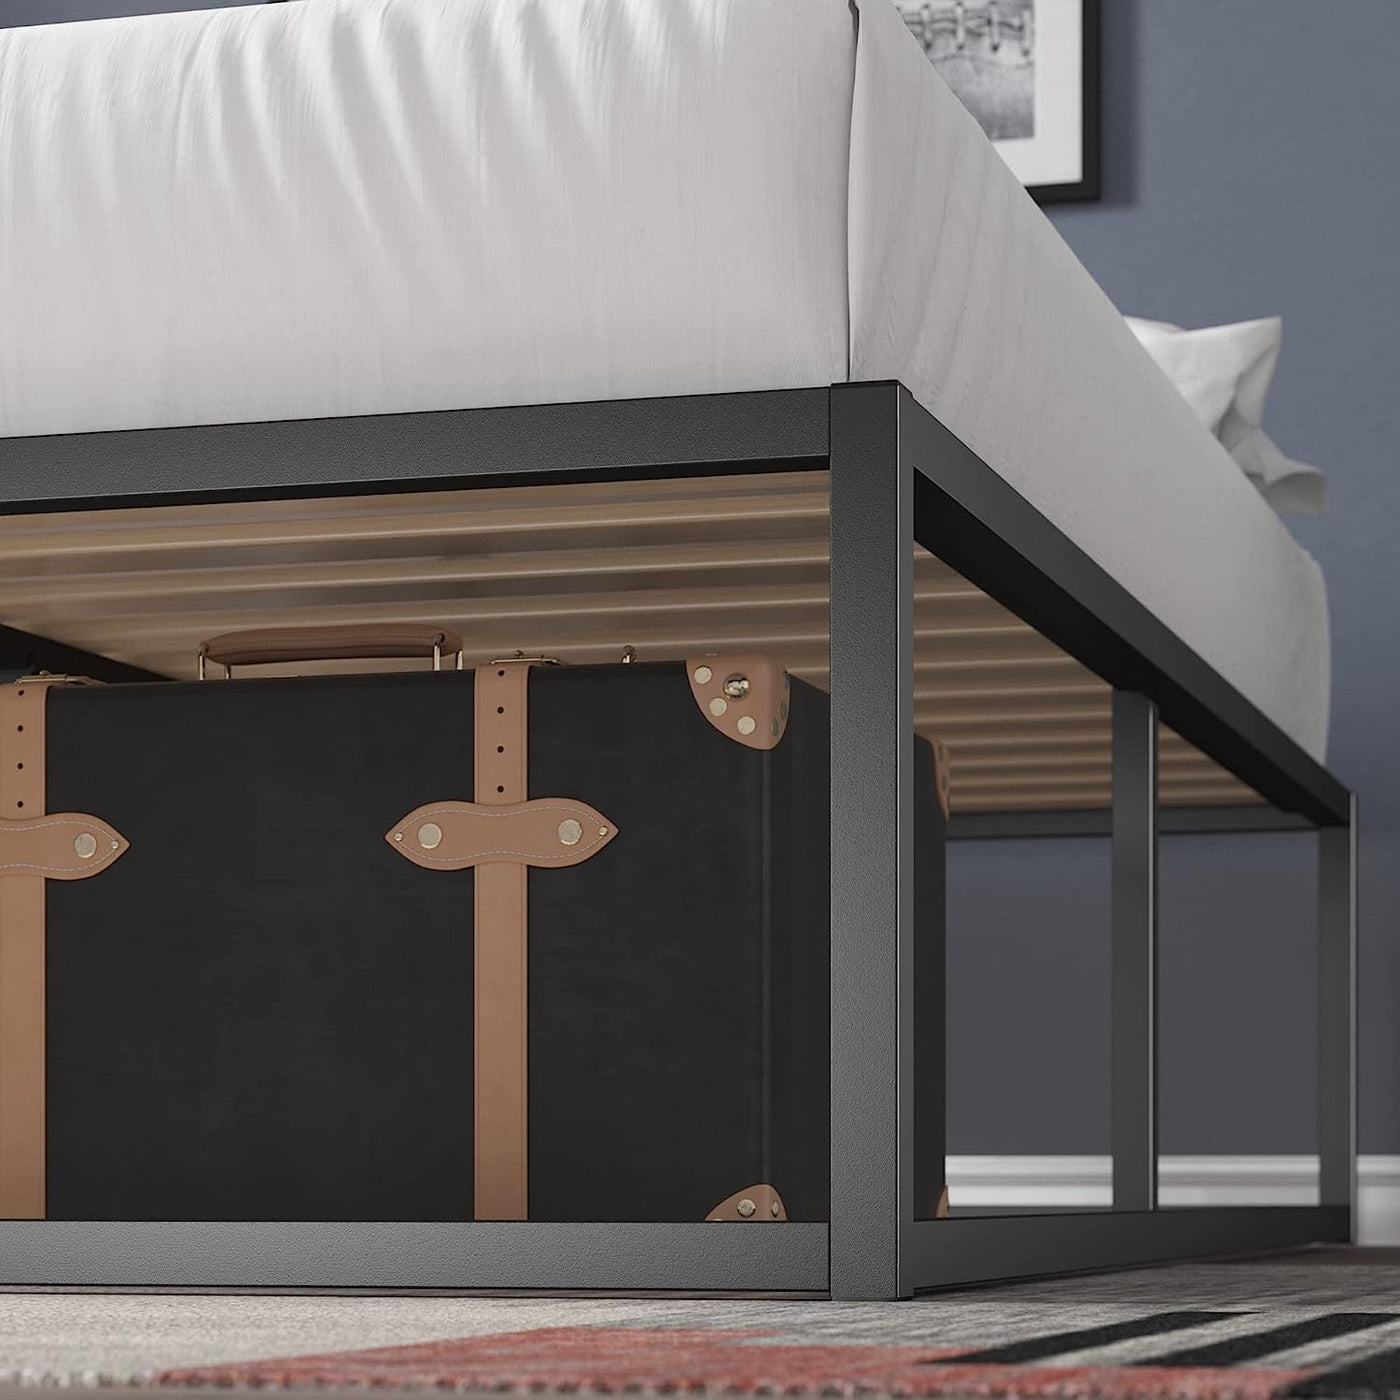 ZINUS Joseph Metal Platforma Bed Frame, Twin - $65